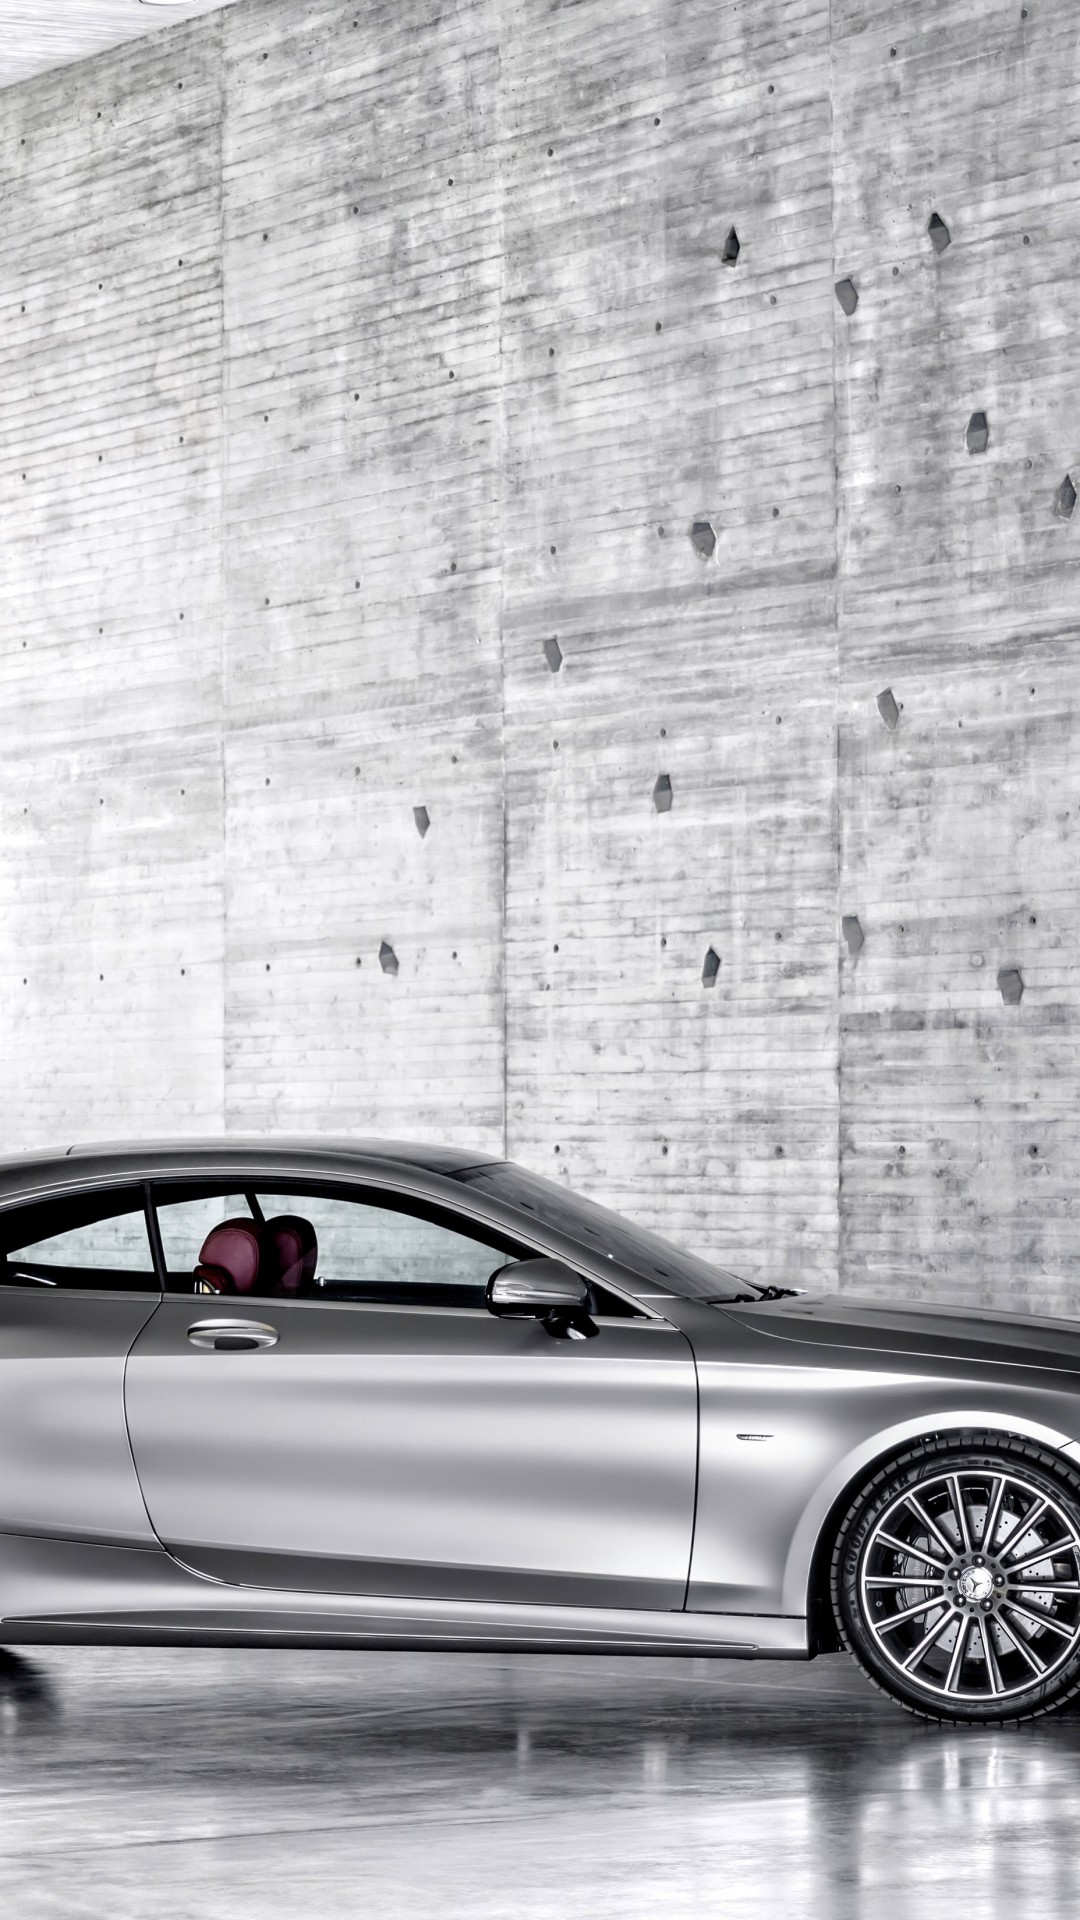 2015 Mercedes-Benz S-Class Coupe Wallpaper for Google Nexus 5X